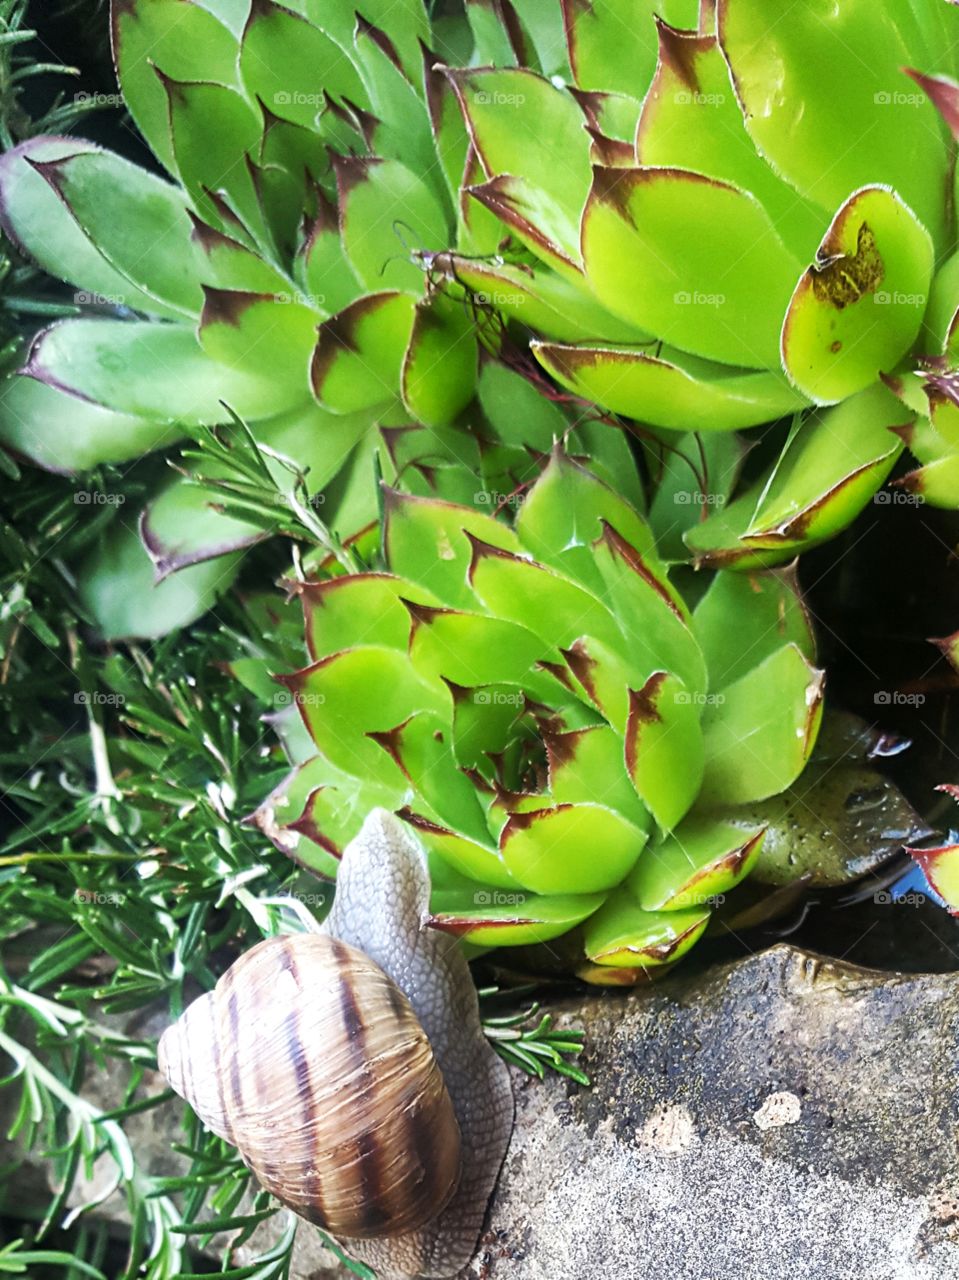 snail and cactus after rain